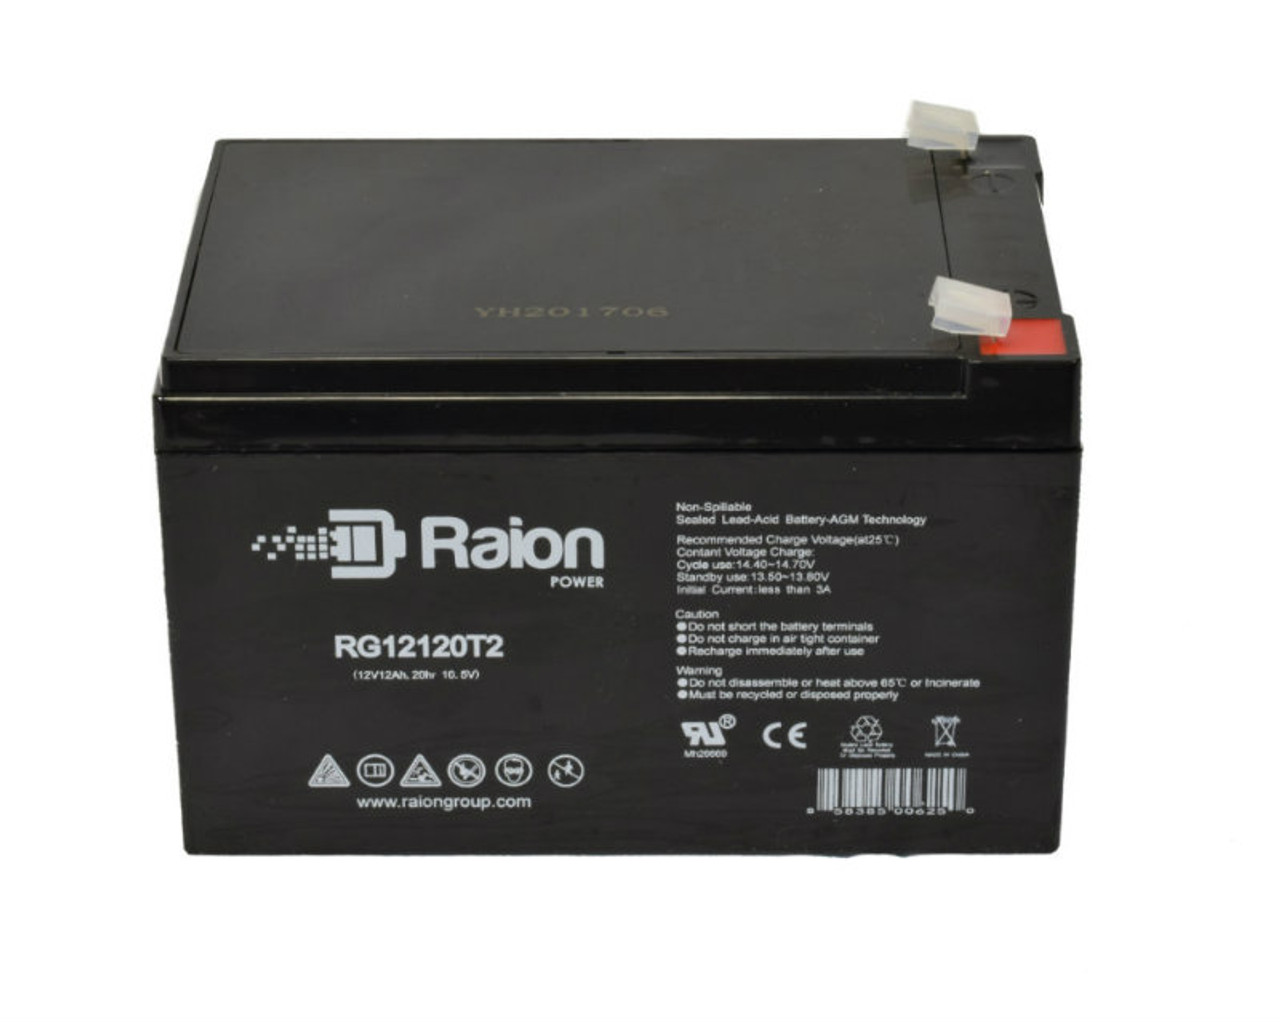 Raion Power RG12120T2 SLA Battery for Tenergy TB12120